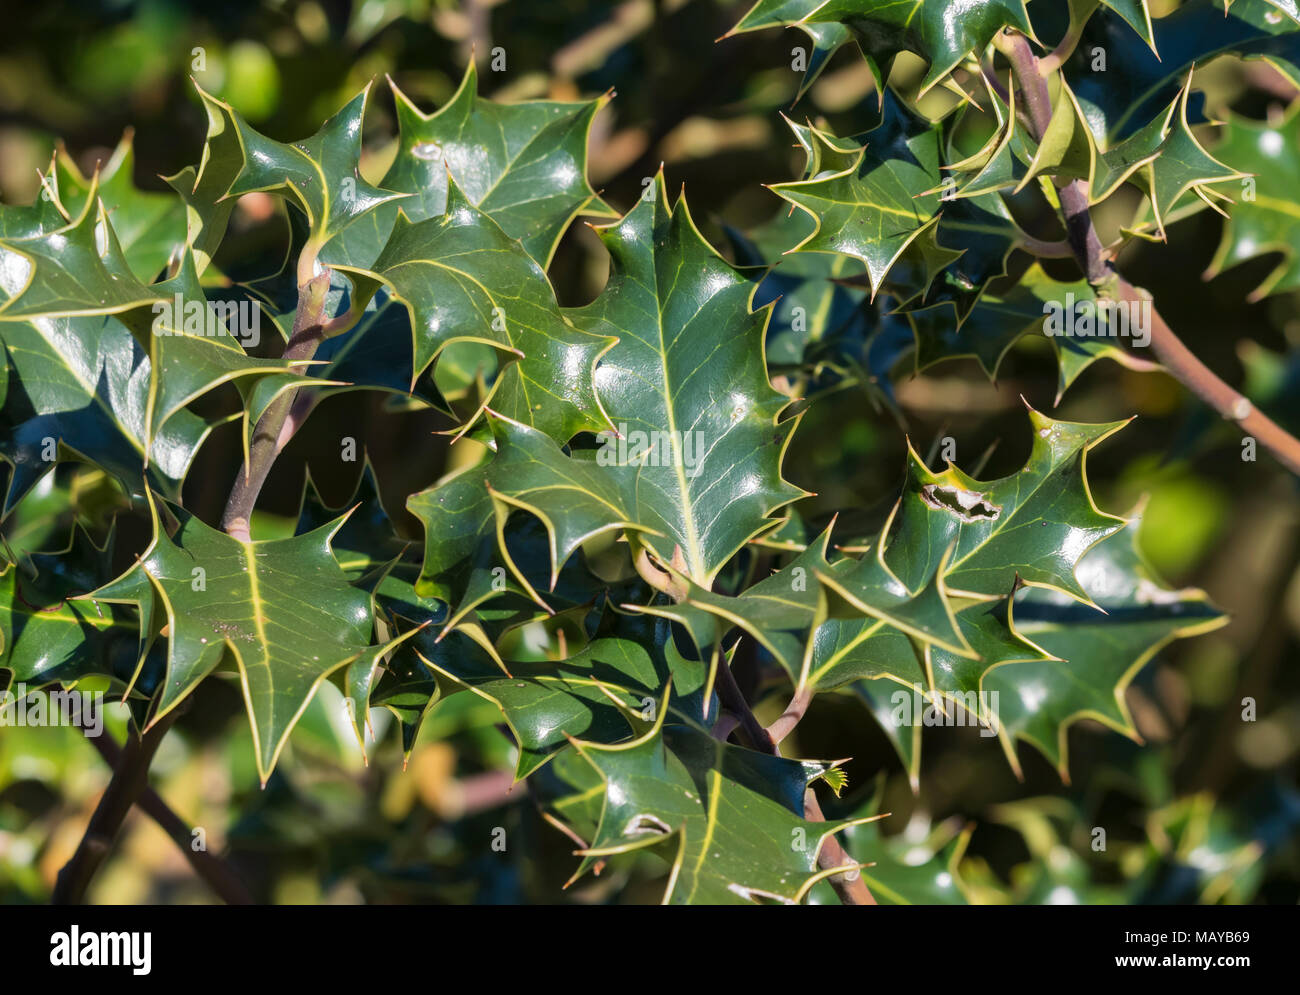 Holly leaves (Ilex aquifolium) growing in Winter in the UK. Stock Photo